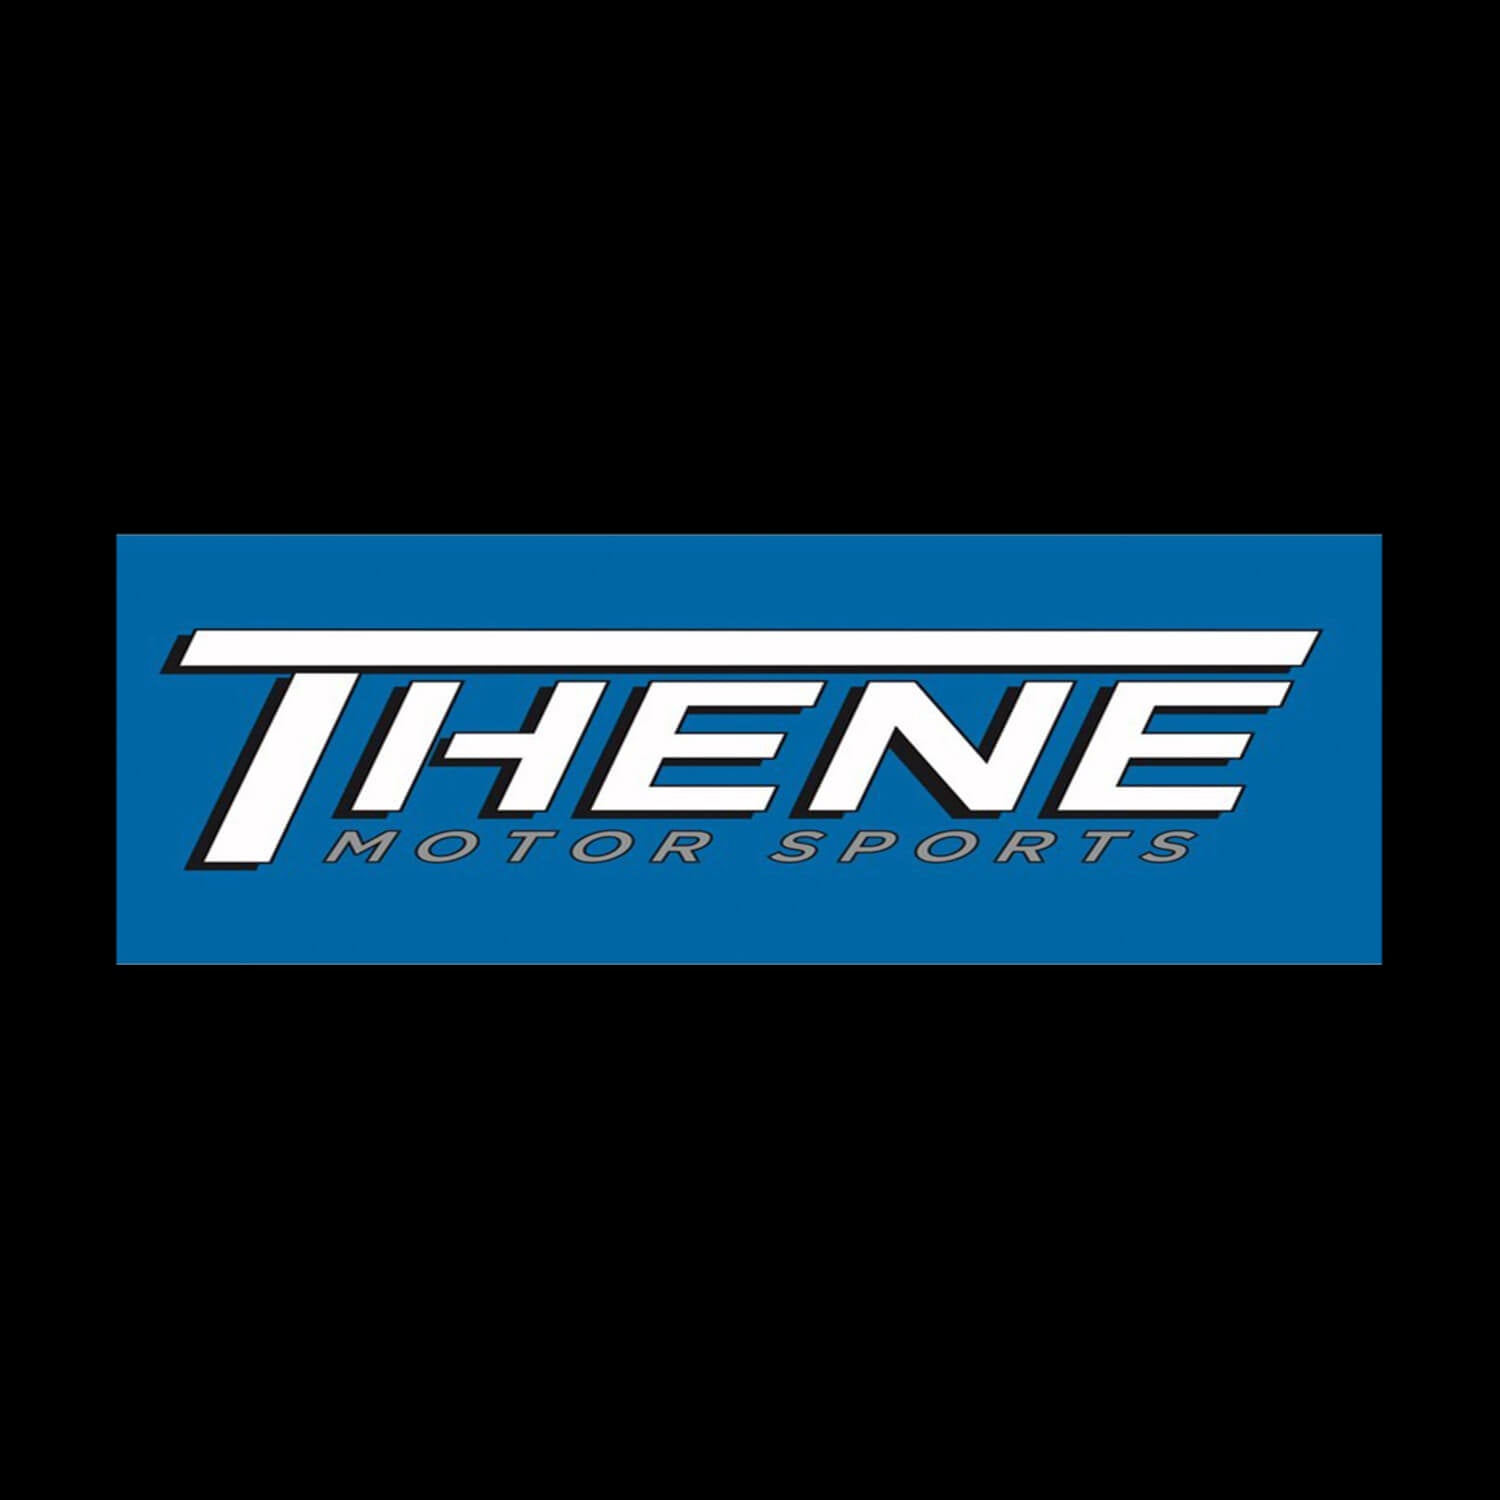 Thene Motorsports Snocross team logo on black background